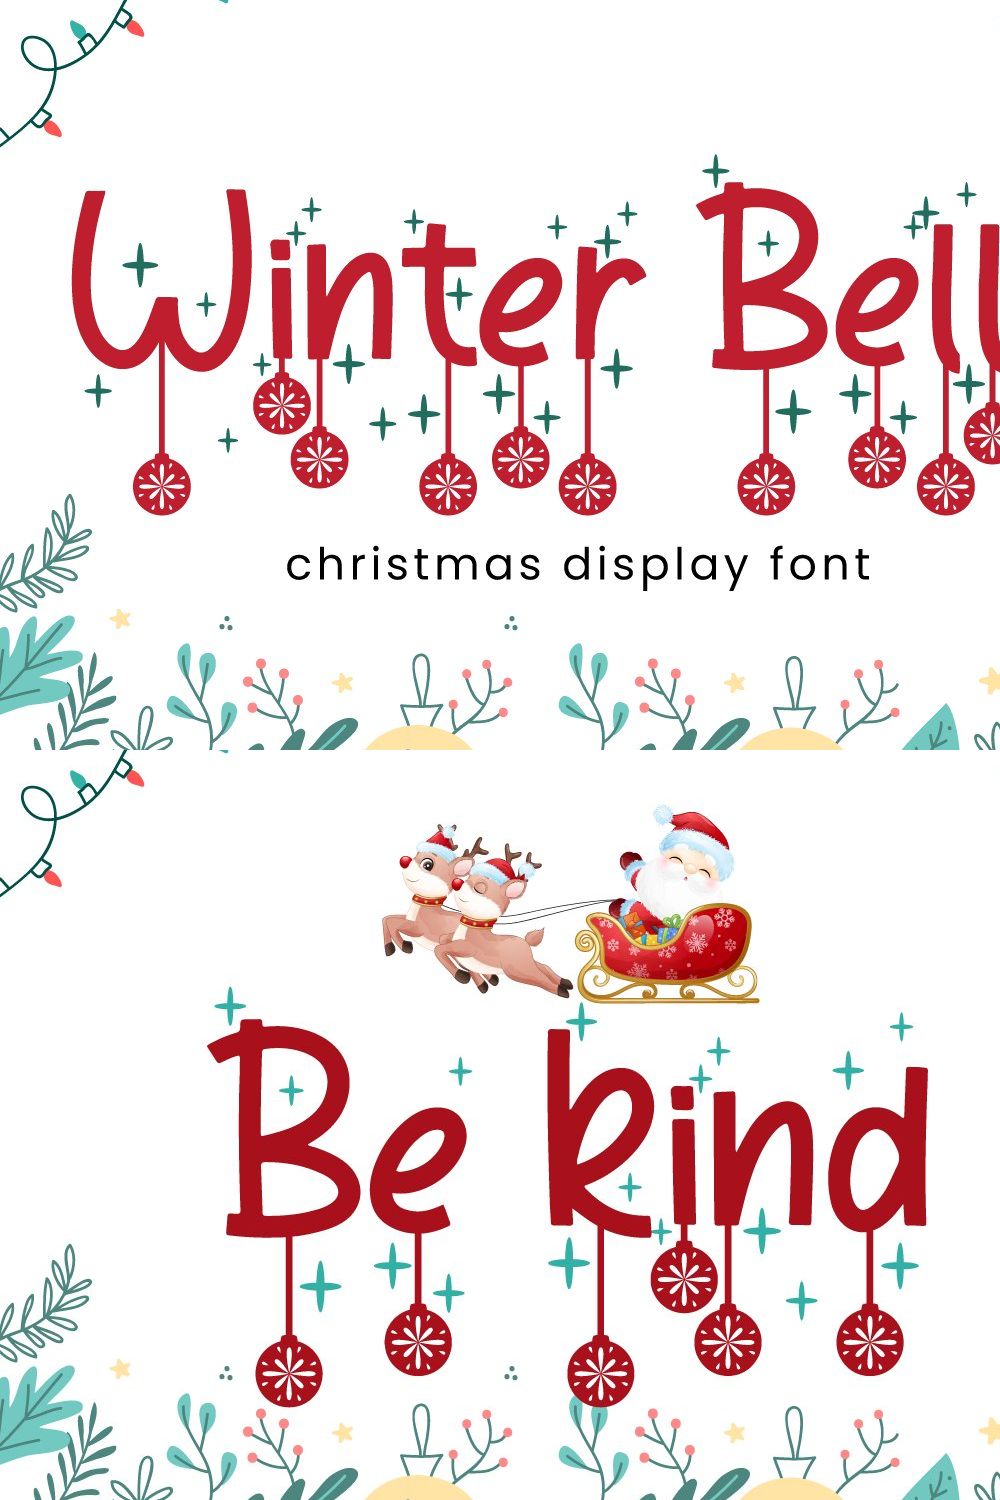 Winter Bells - Christmas Font pinterest preview image.